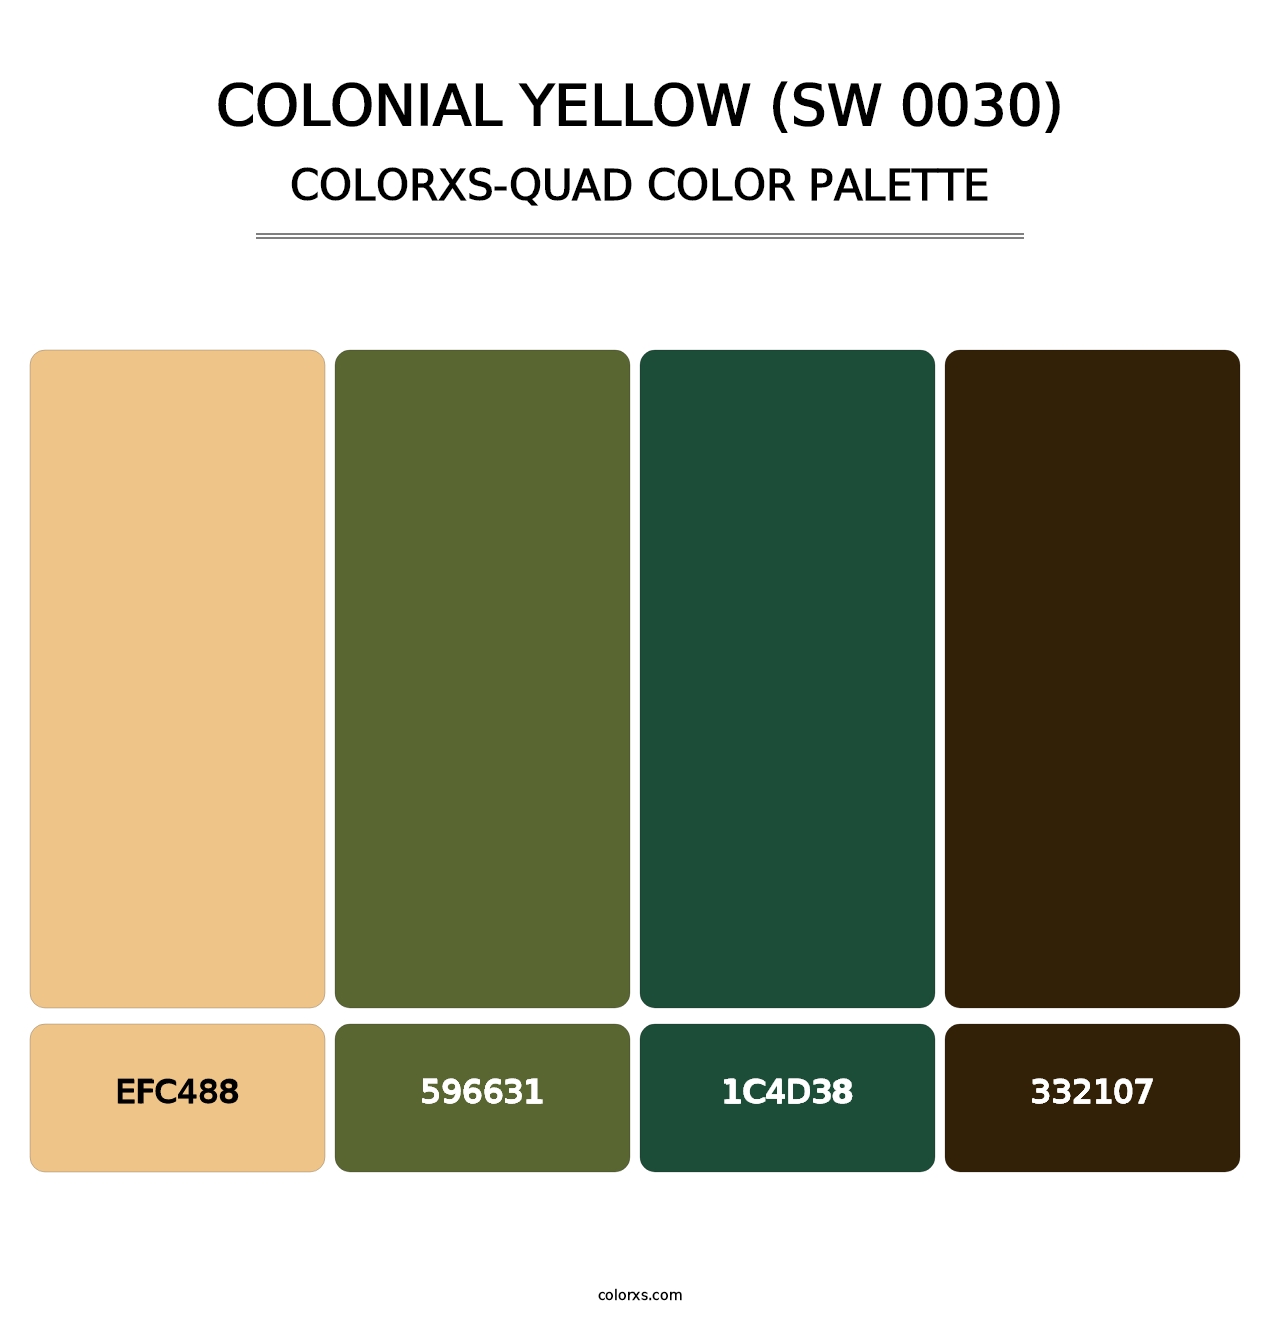 Colonial Yellow (SW 0030) - Colorxs Quad Palette